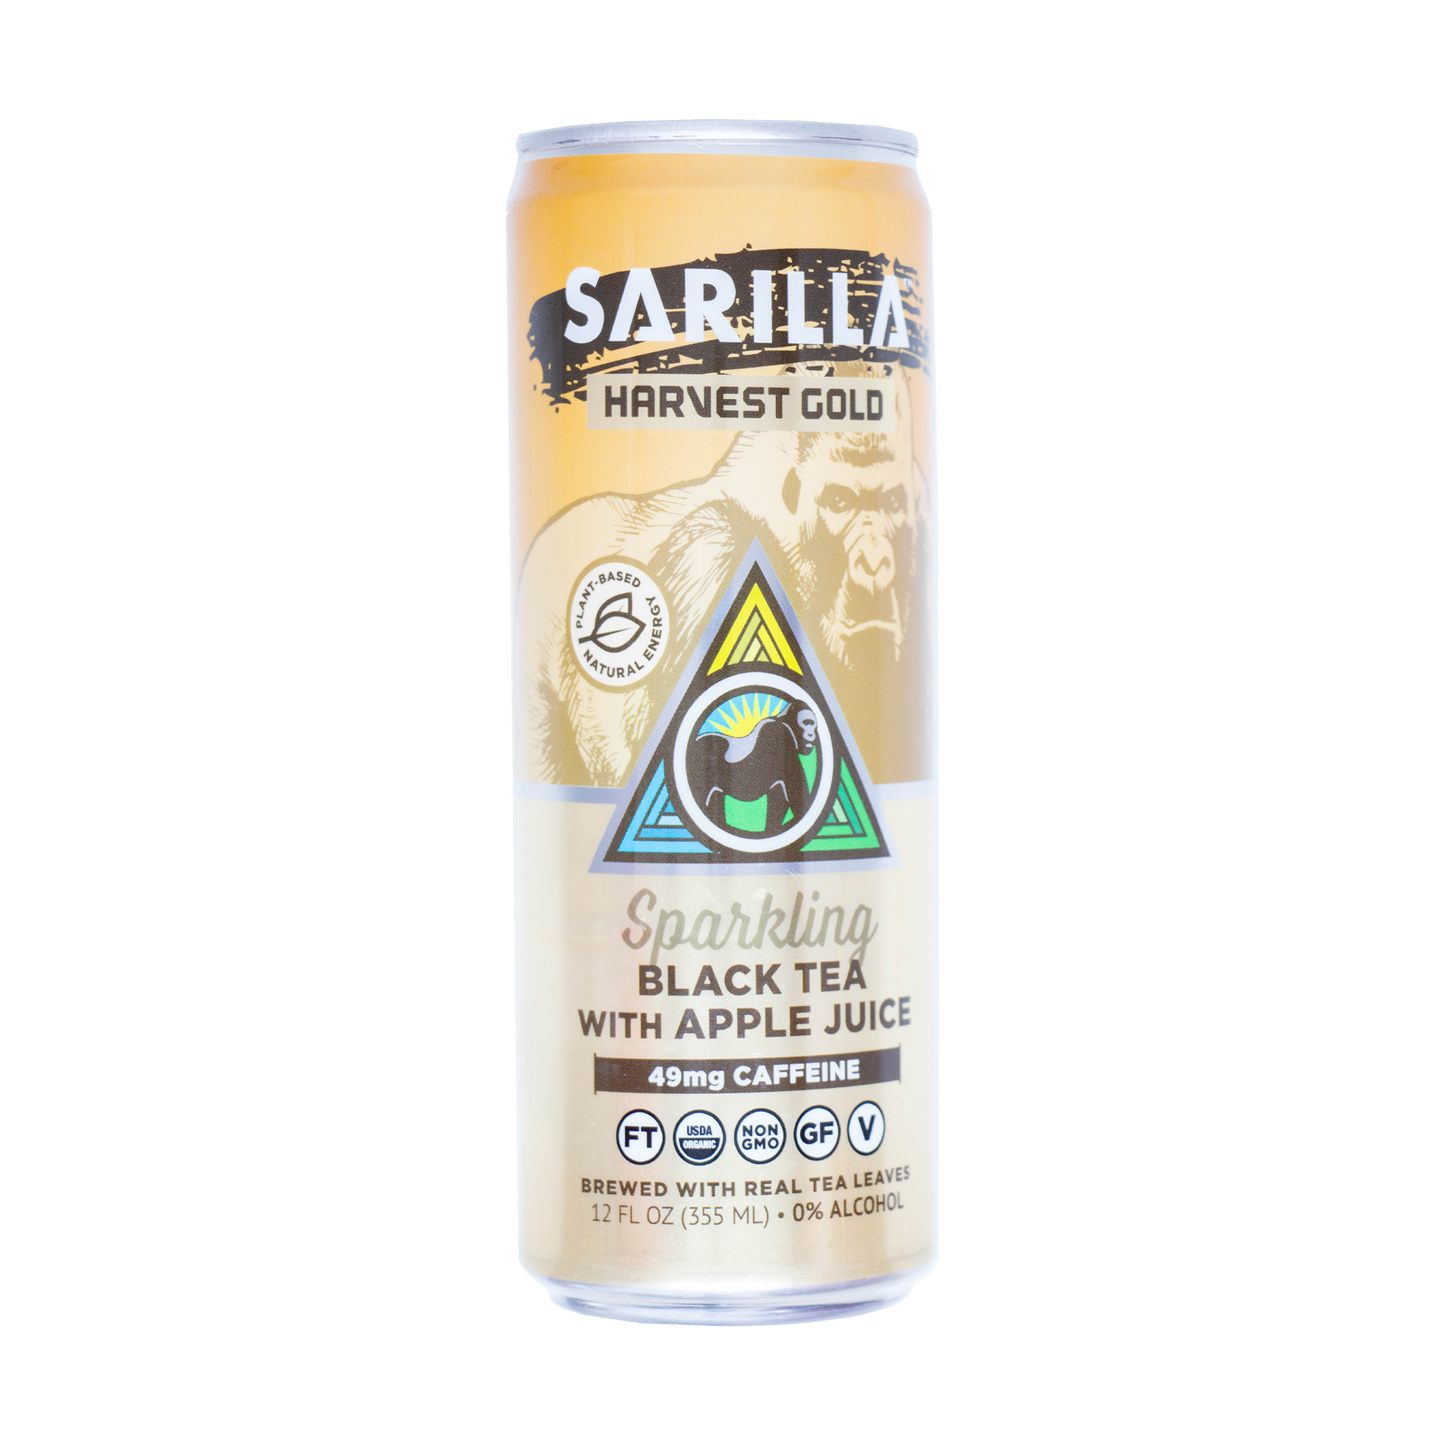 Sarilla - Sparkling Black Tea with Apple Juice - 49mg Caffeine